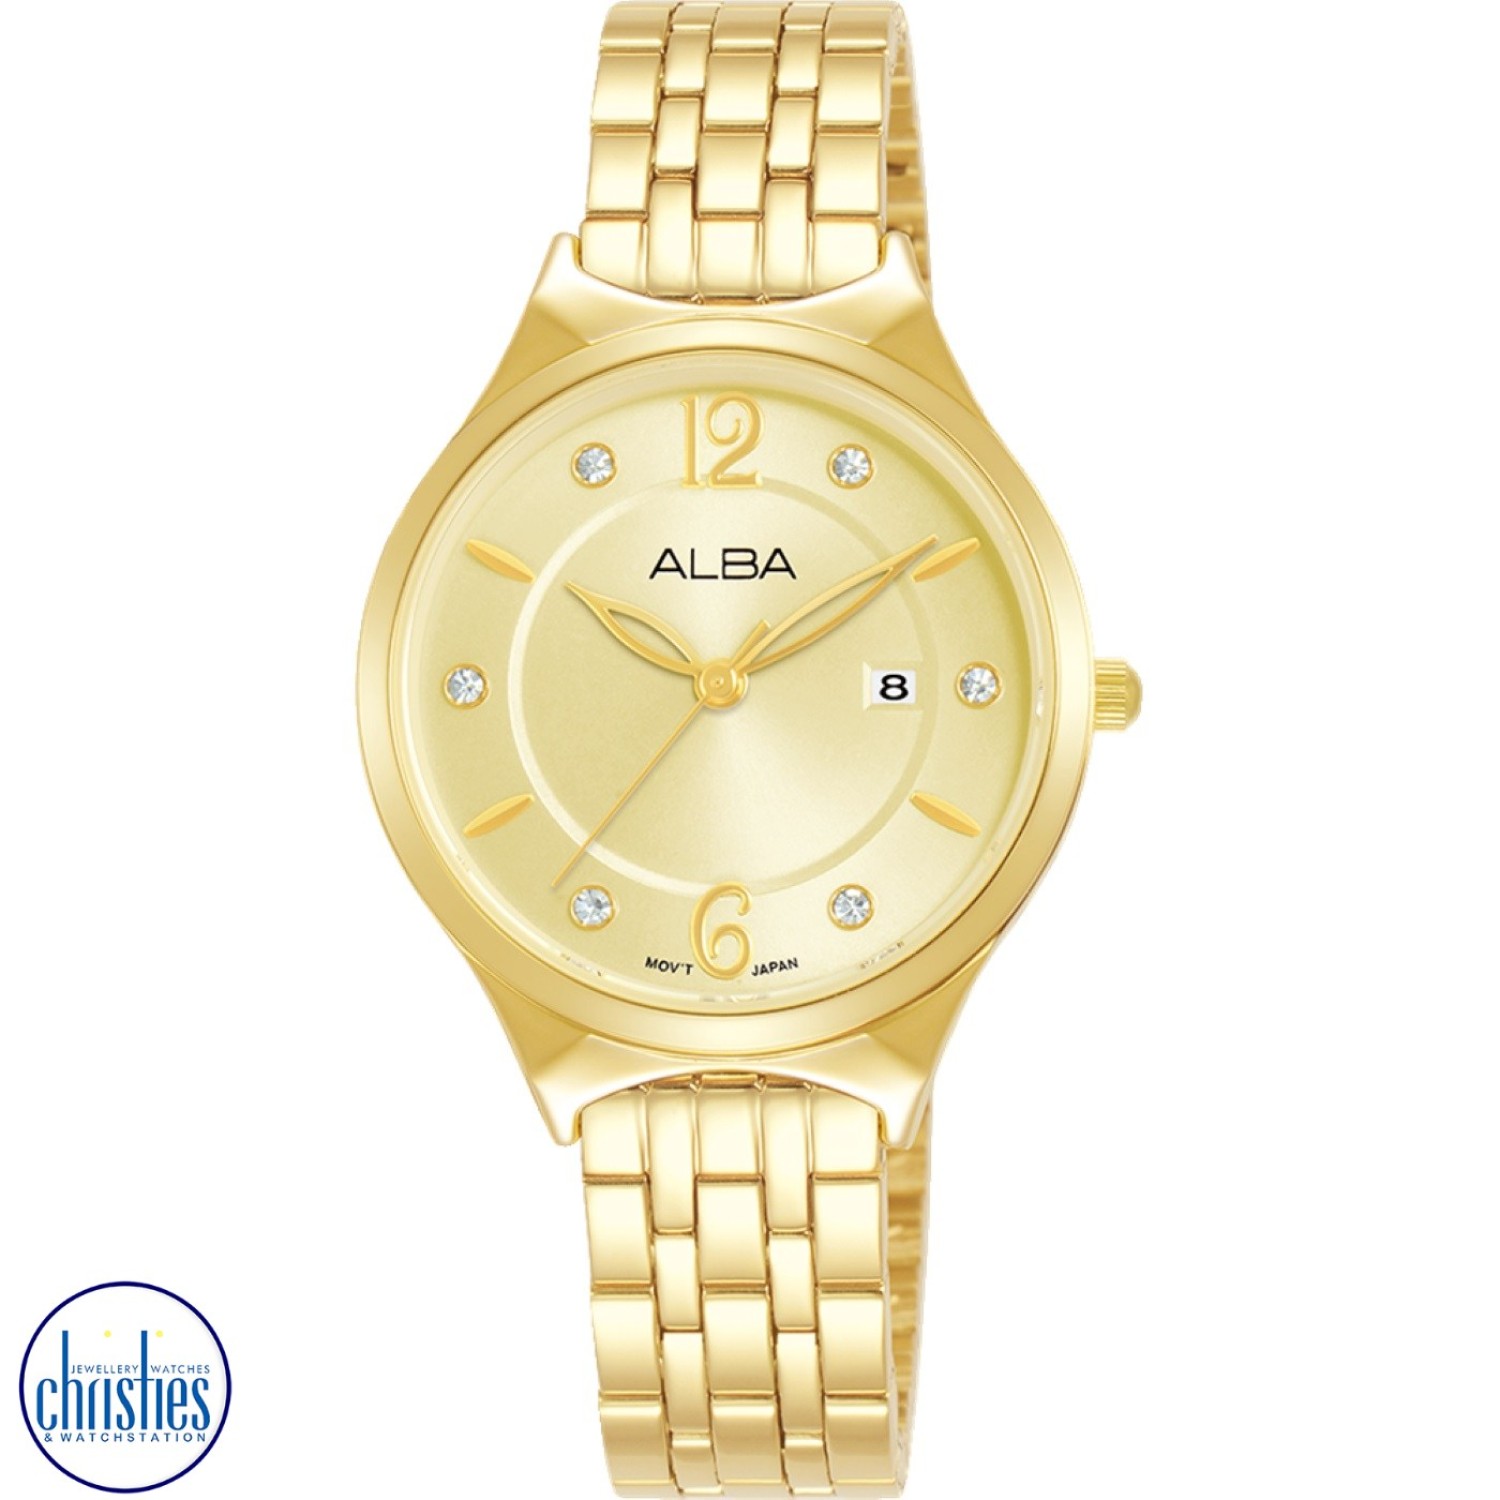 AH7AQ8X  ALBA Ladies Fashion Watch ALBA watch original price